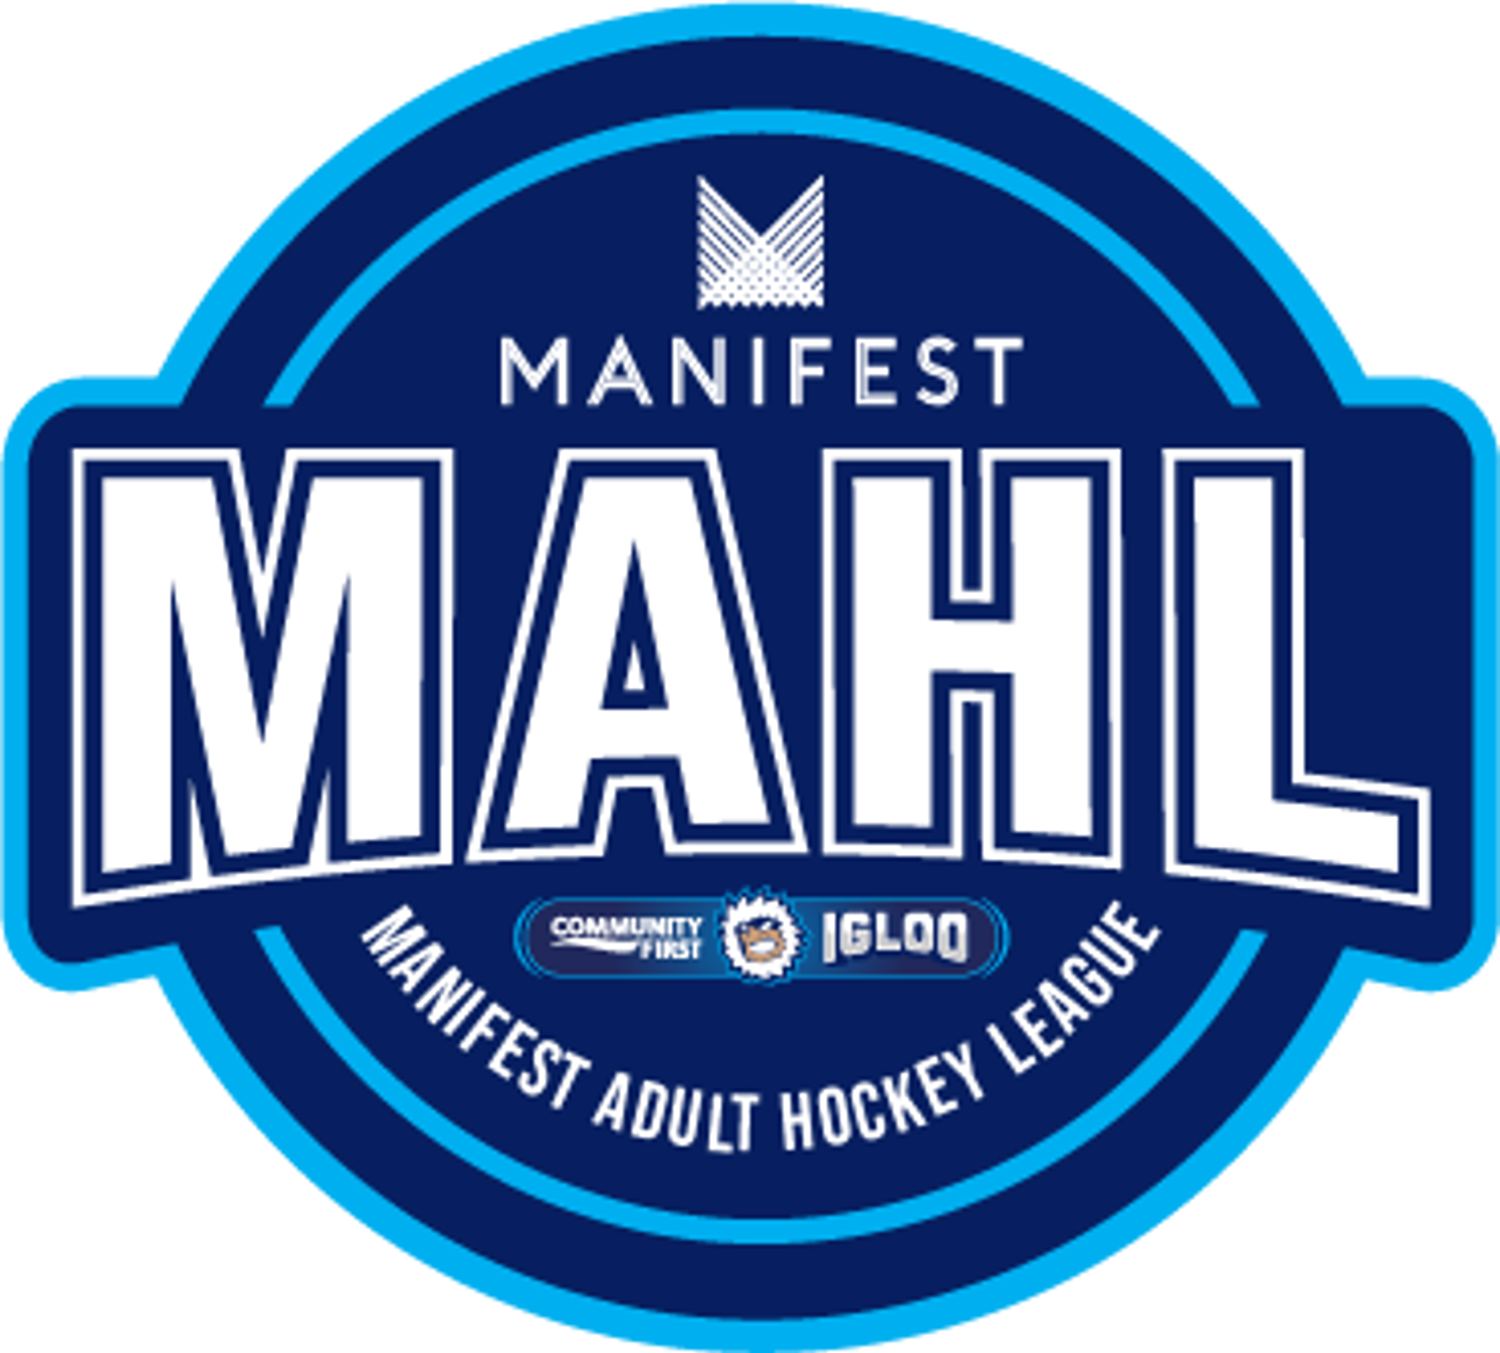 Manifest Adult Hockey League